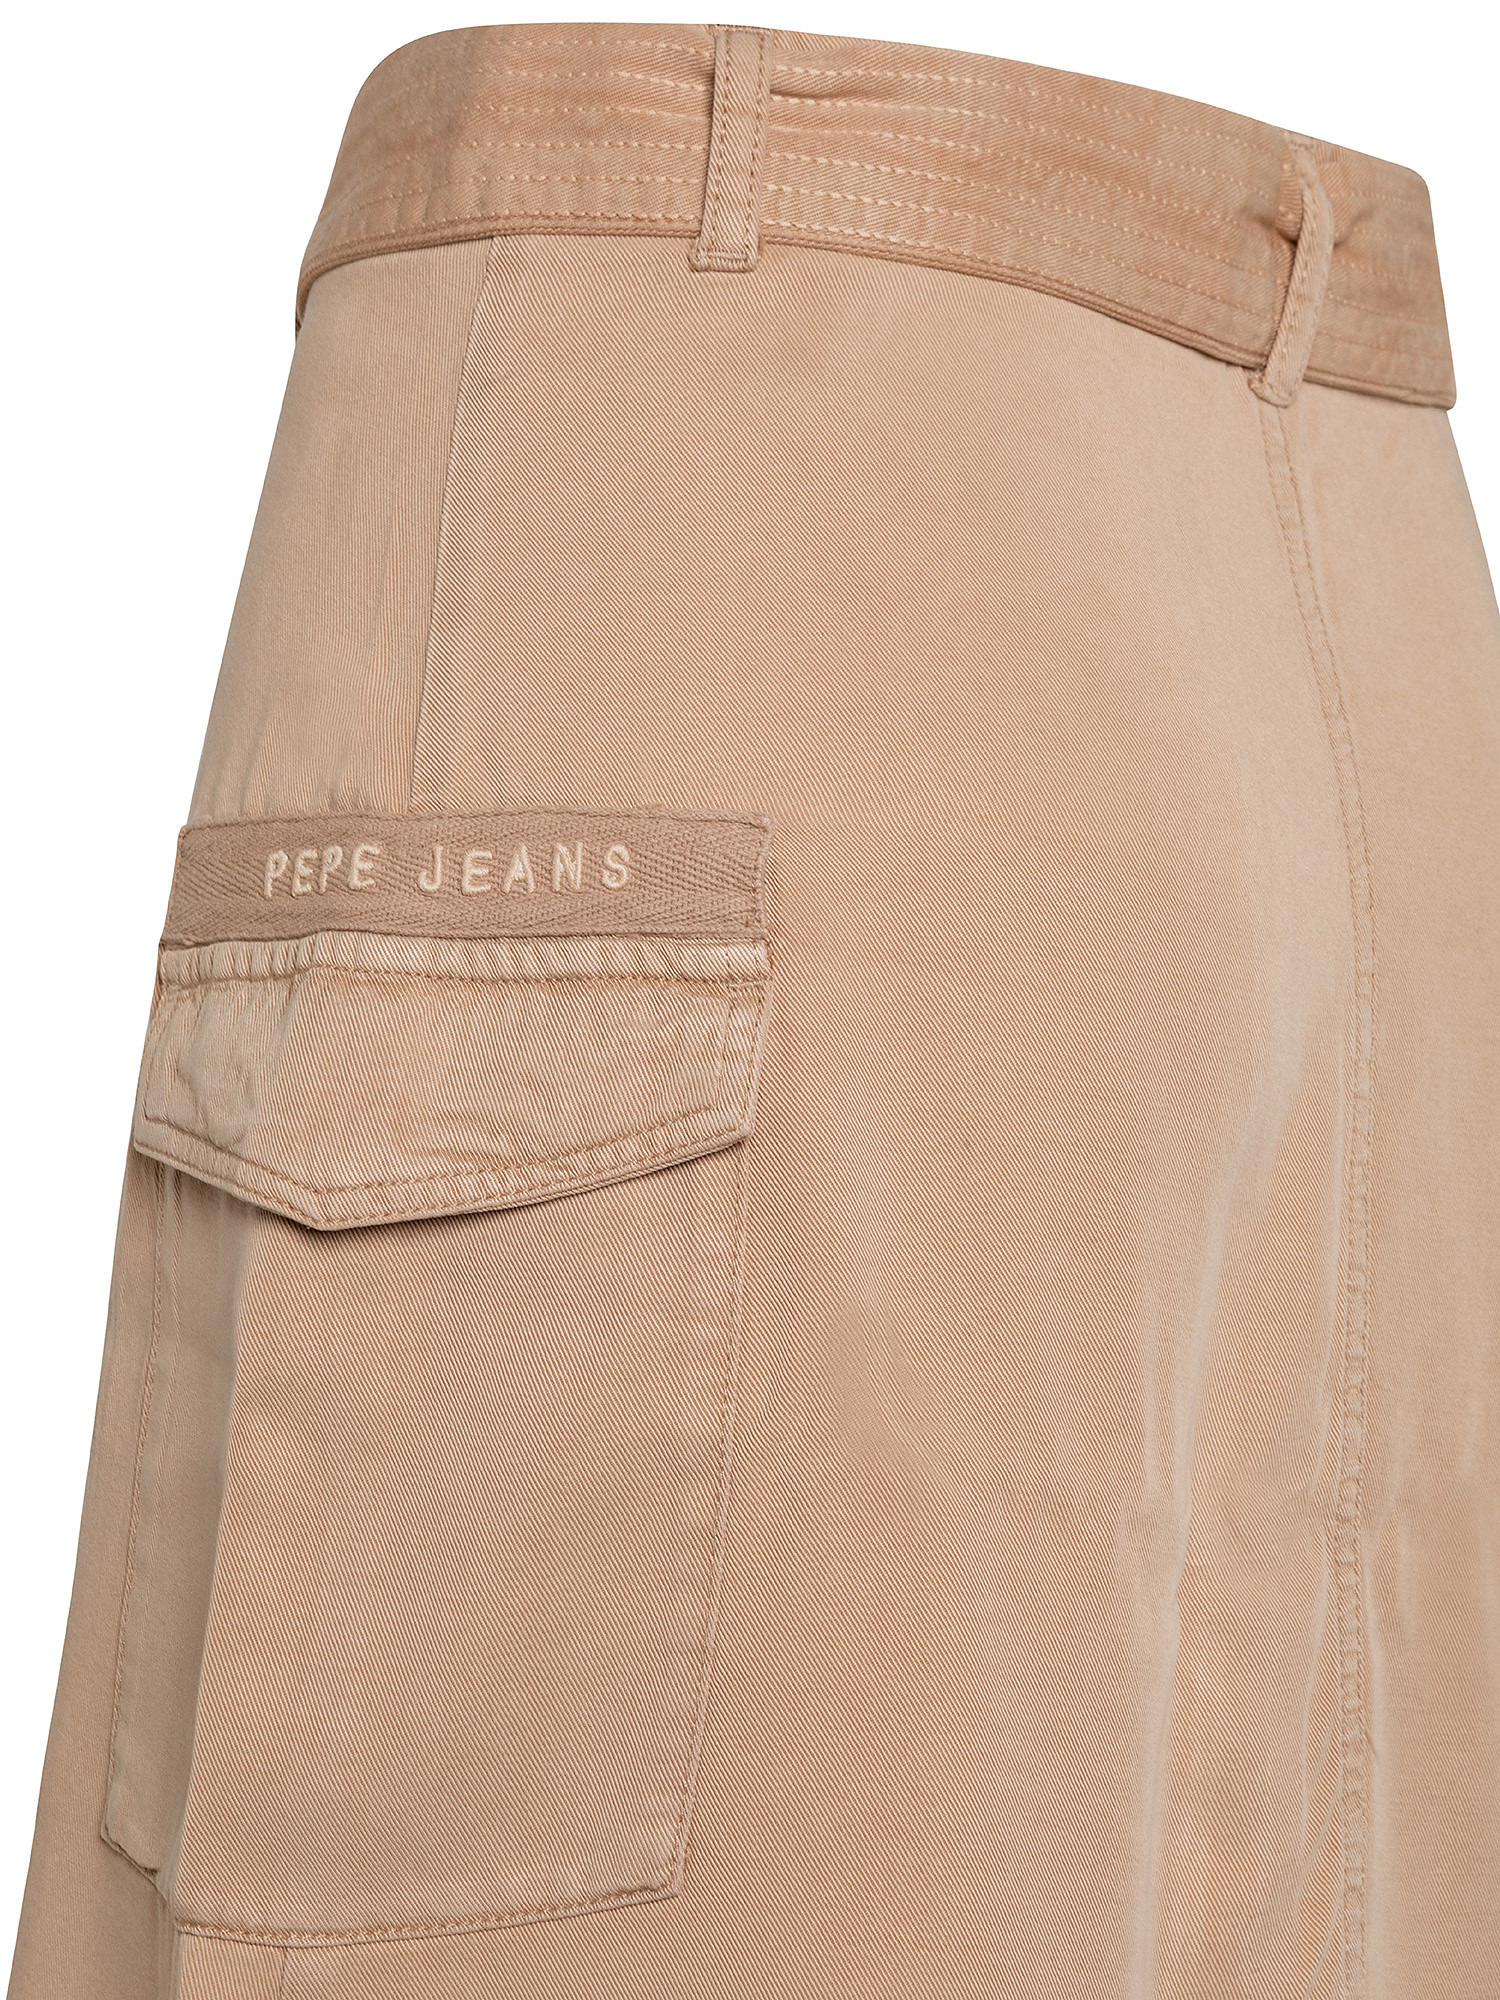 Floren skirt with zip, Beige, large image number 2